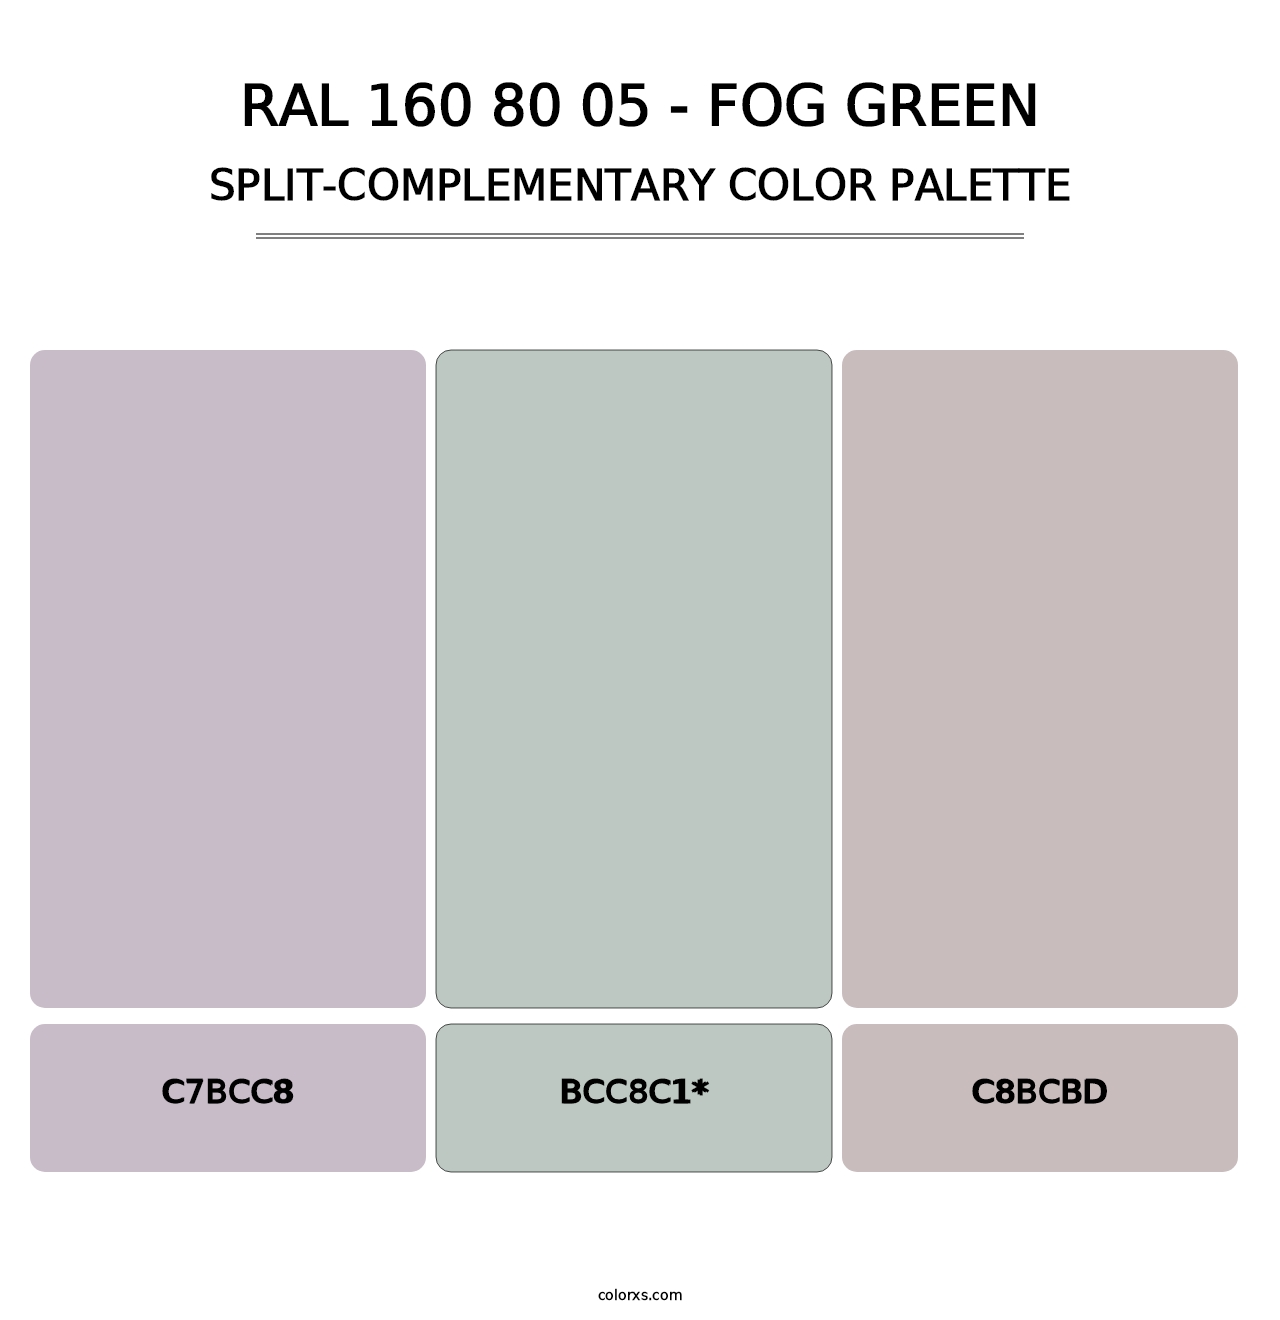 RAL 160 80 05 - Fog Green - Split-Complementary Color Palette